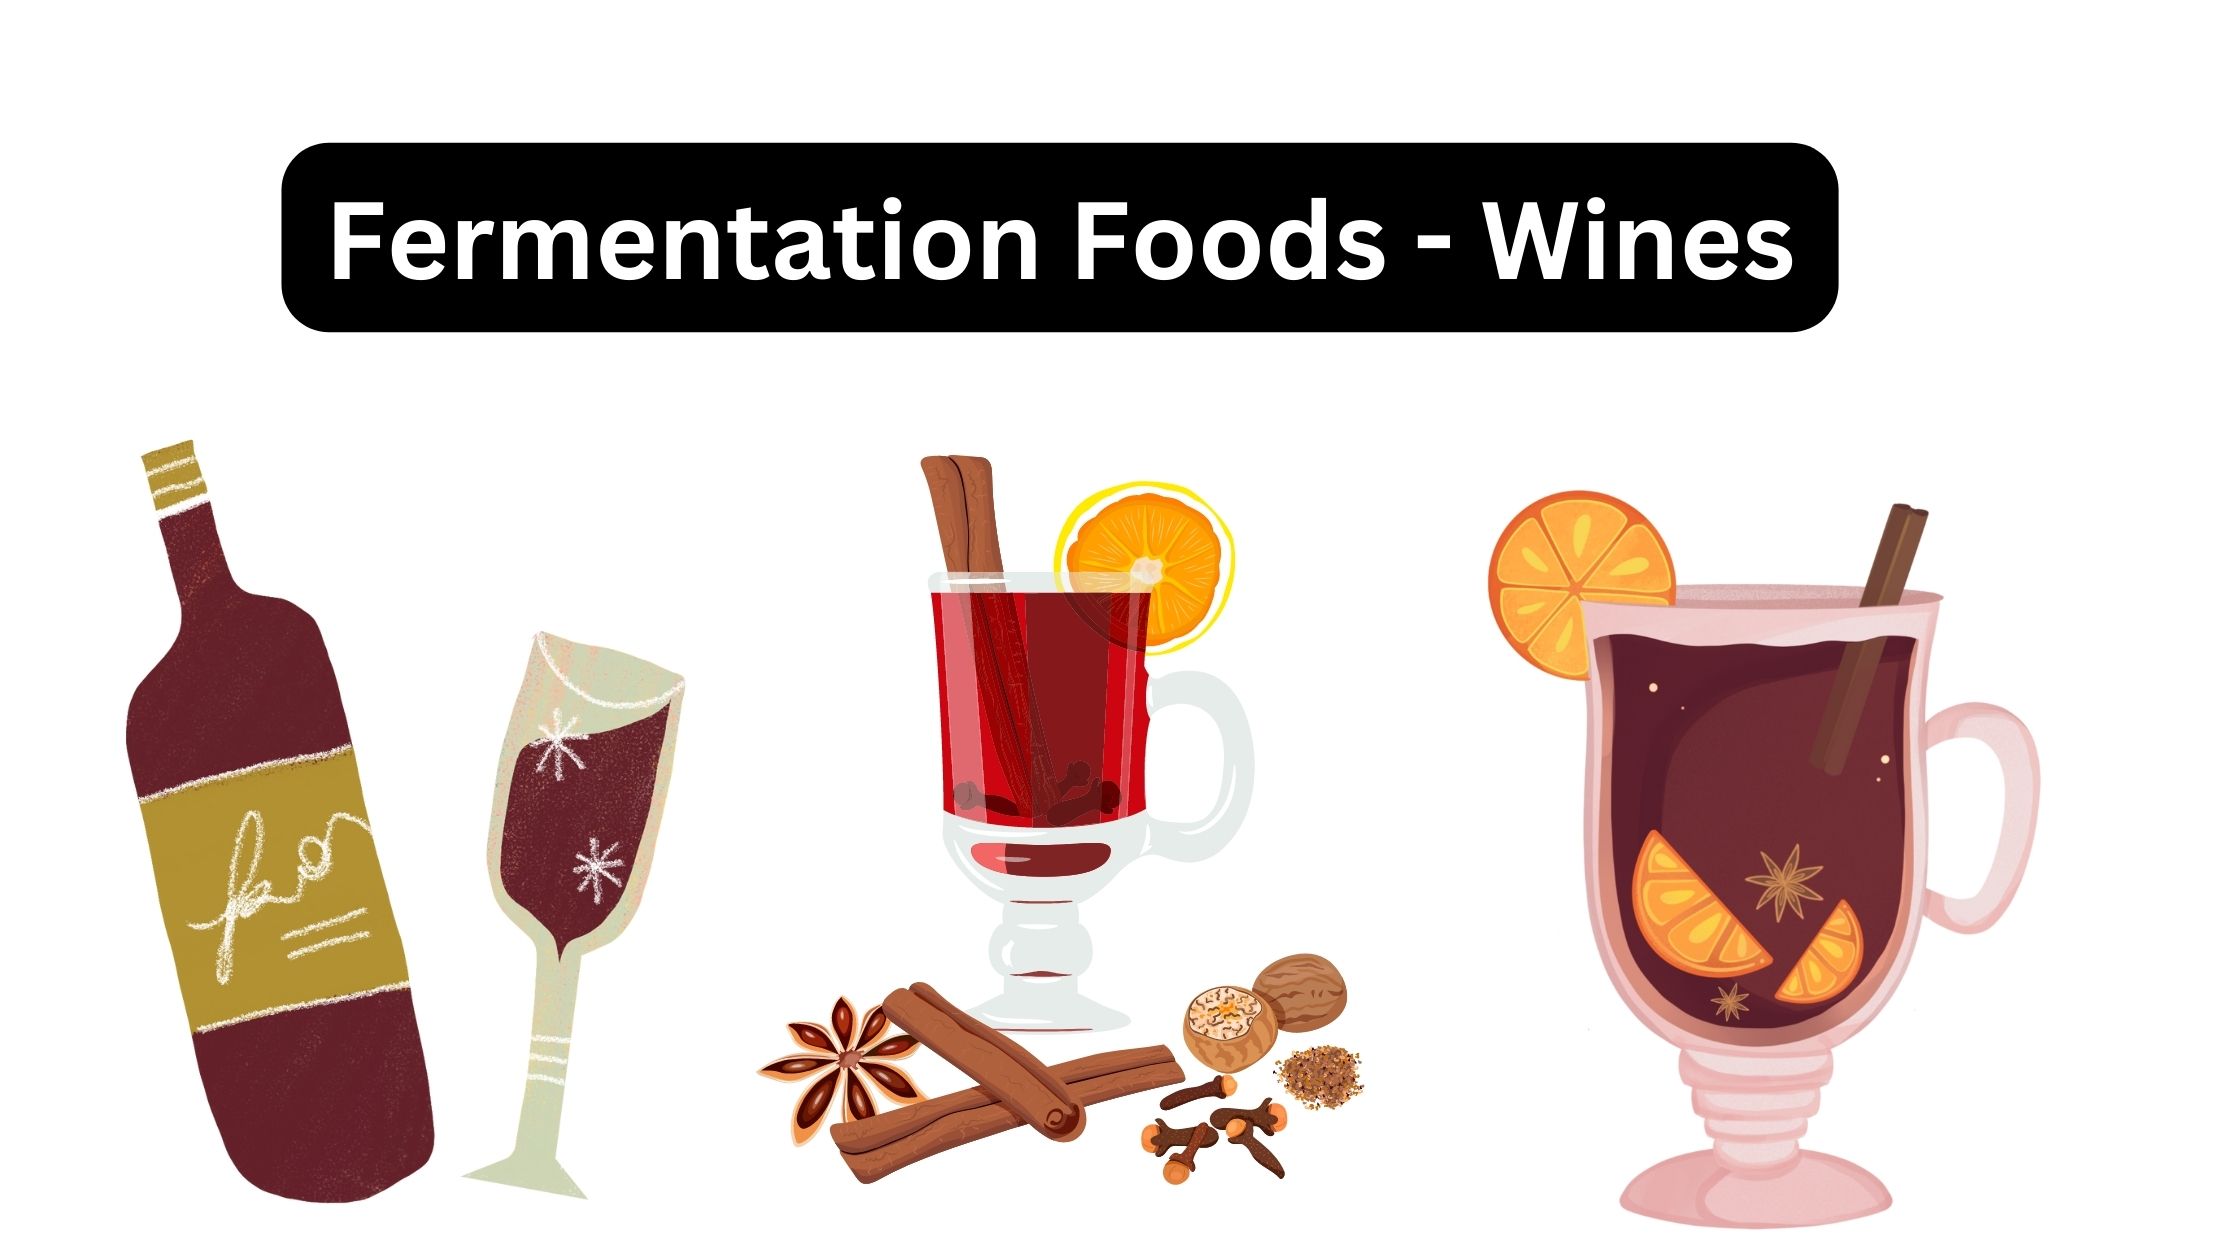 Fermentation Foods - Wines